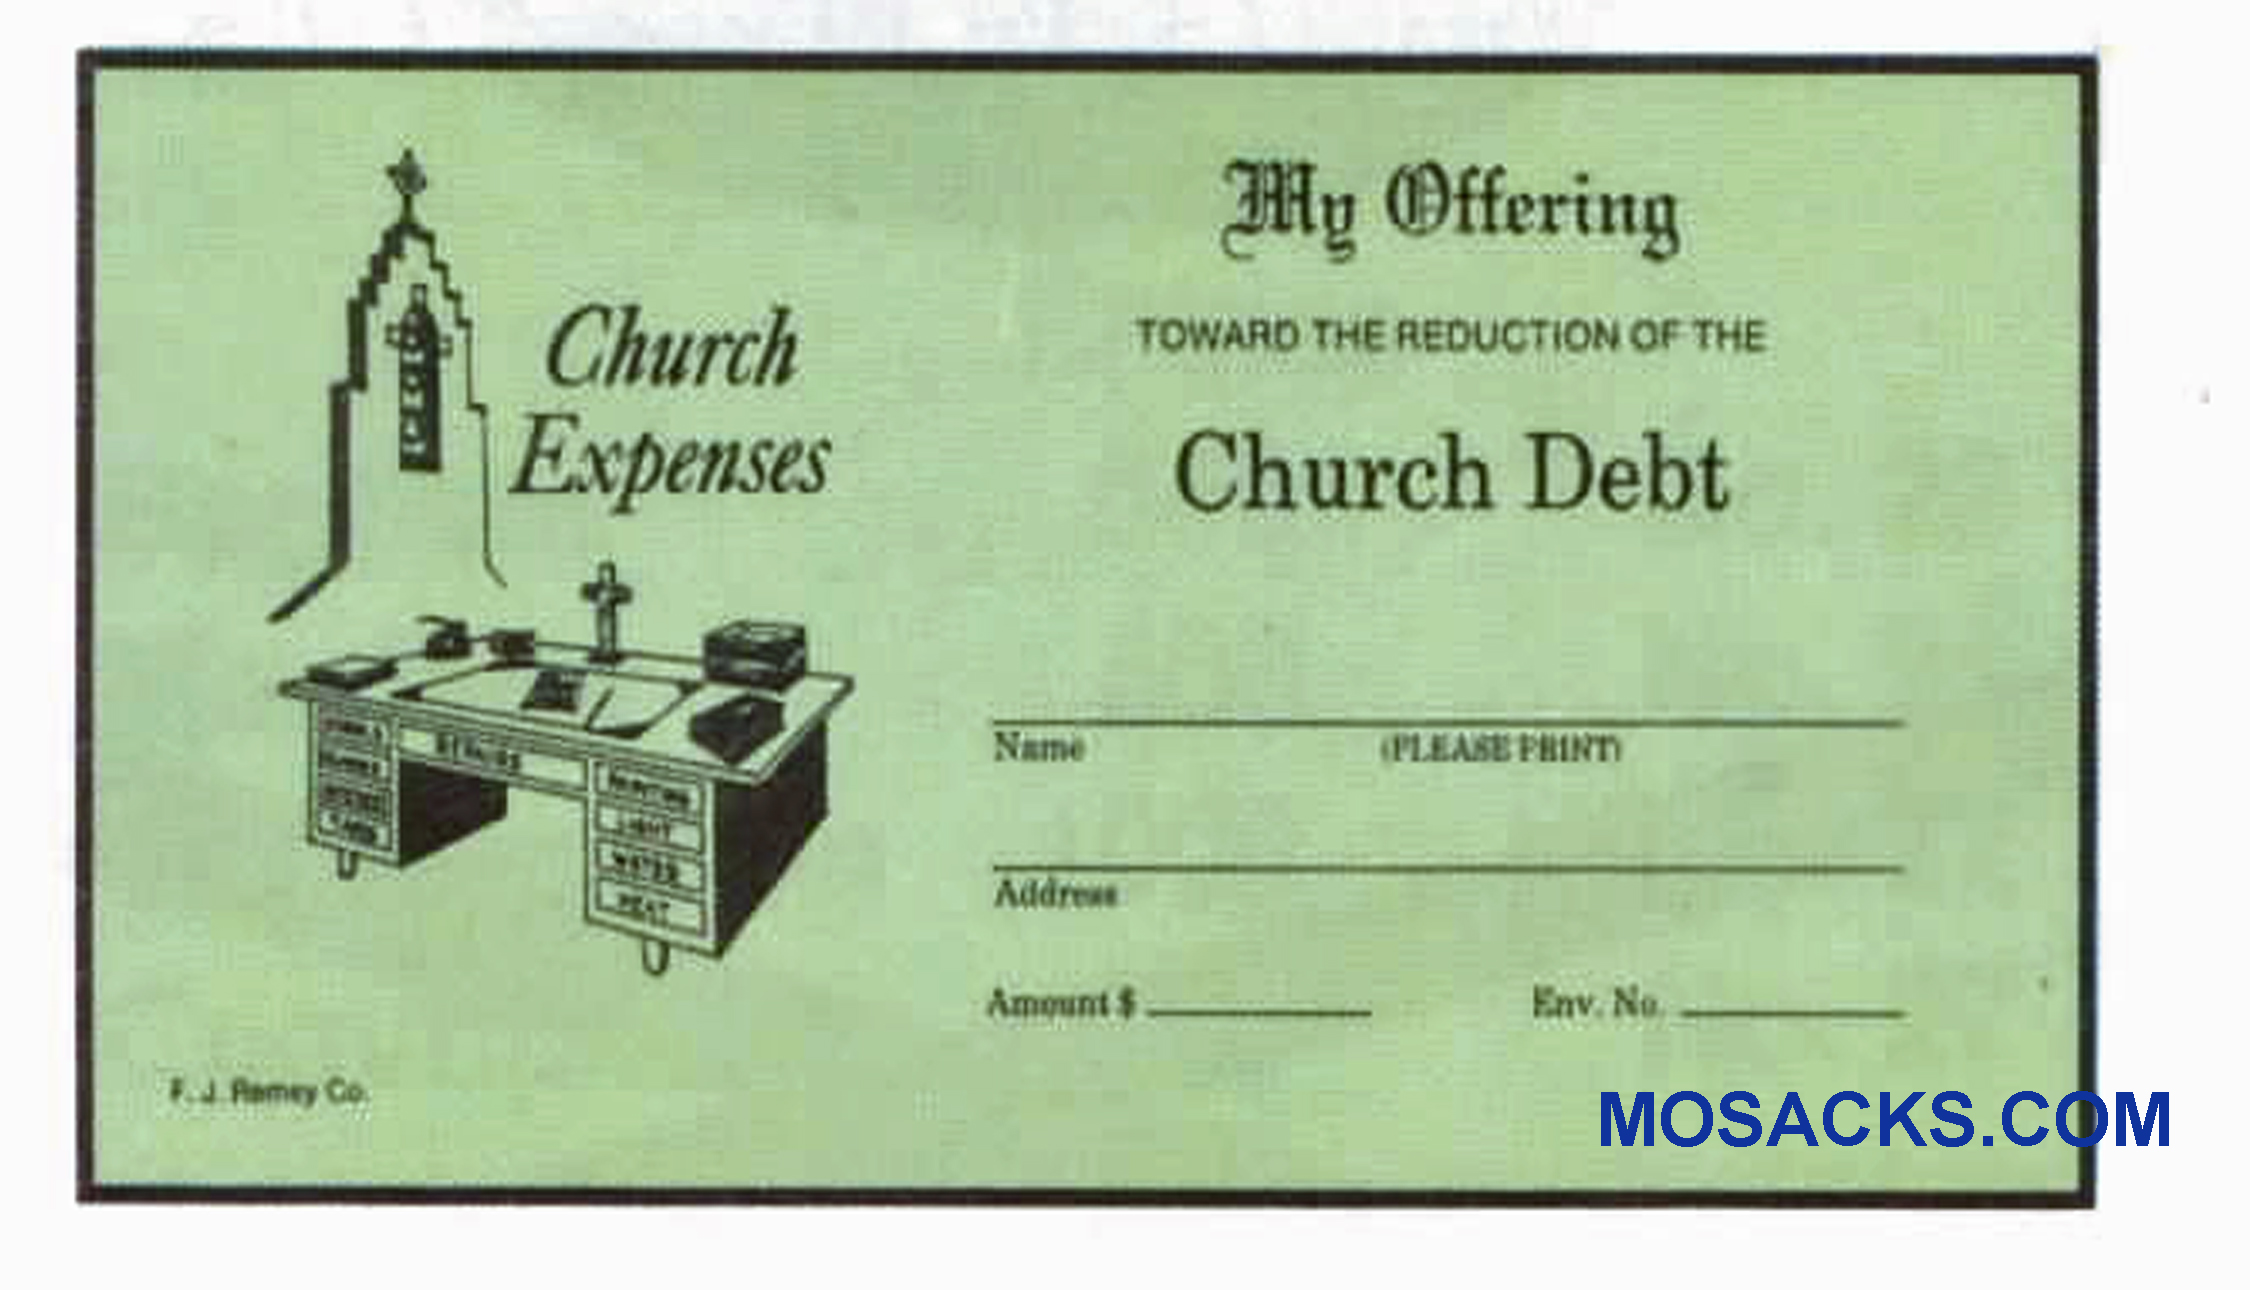 Offering Toward Reduction of Church Debt Envelope 6-1/4 x 3-1/8 #304-342